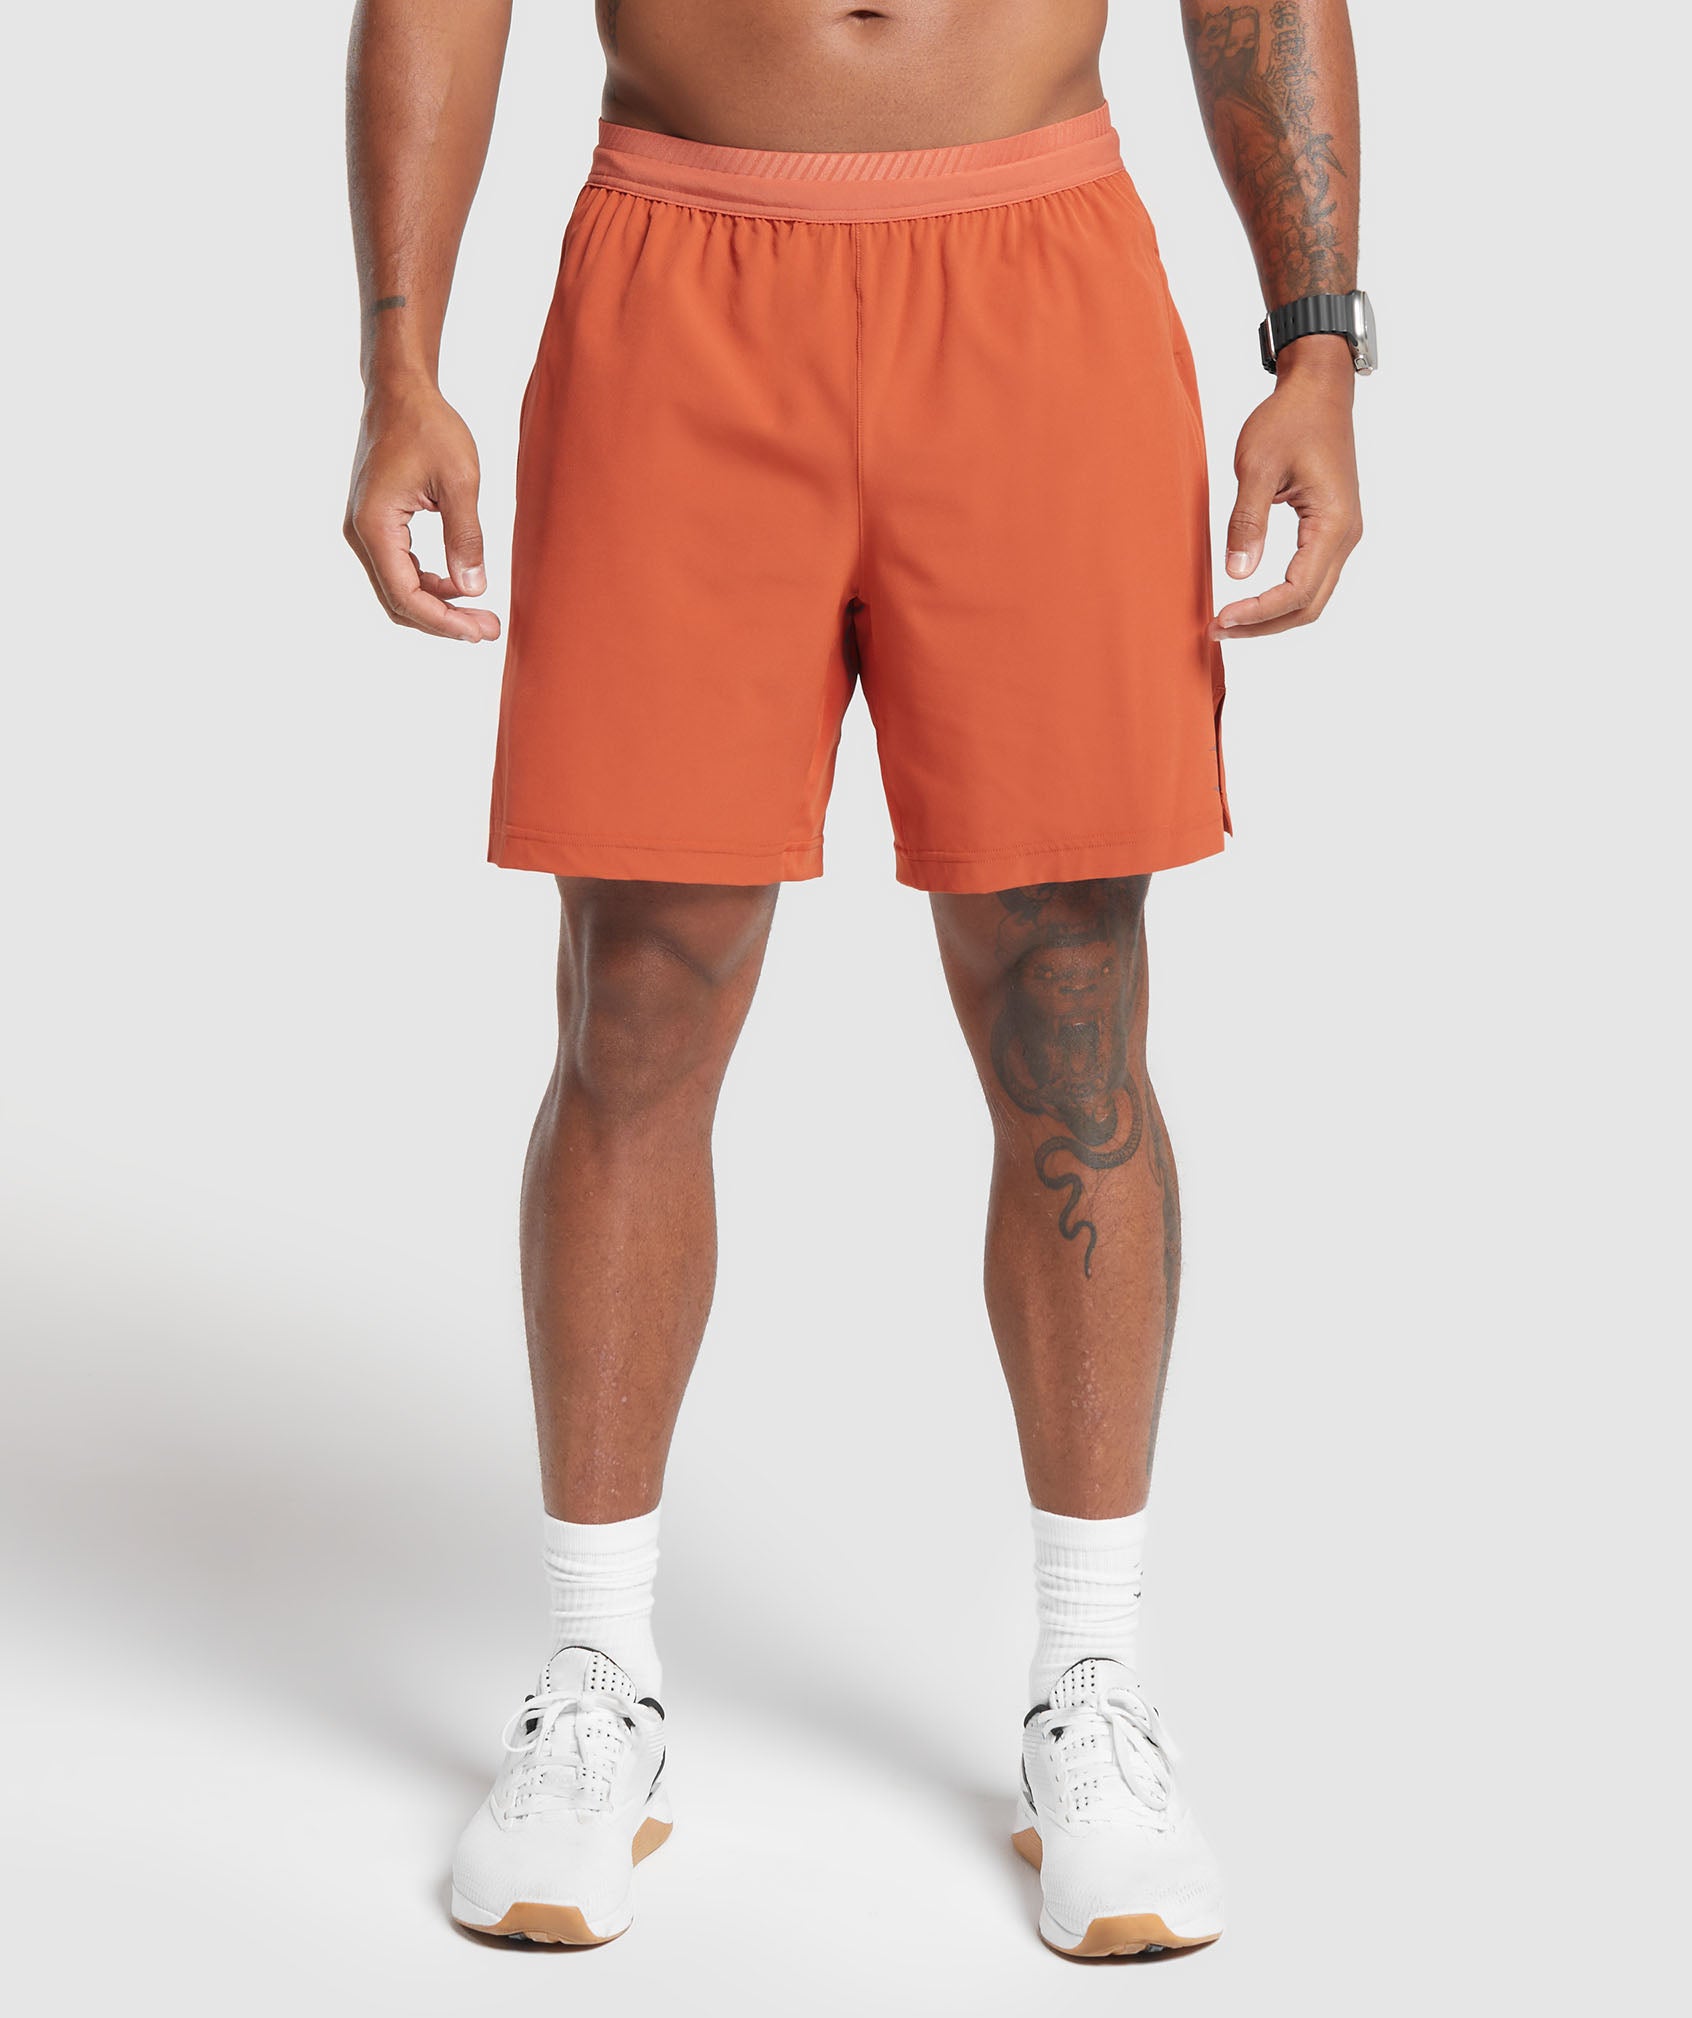 Apex 7" Hybrid Shorts in Rust Orange